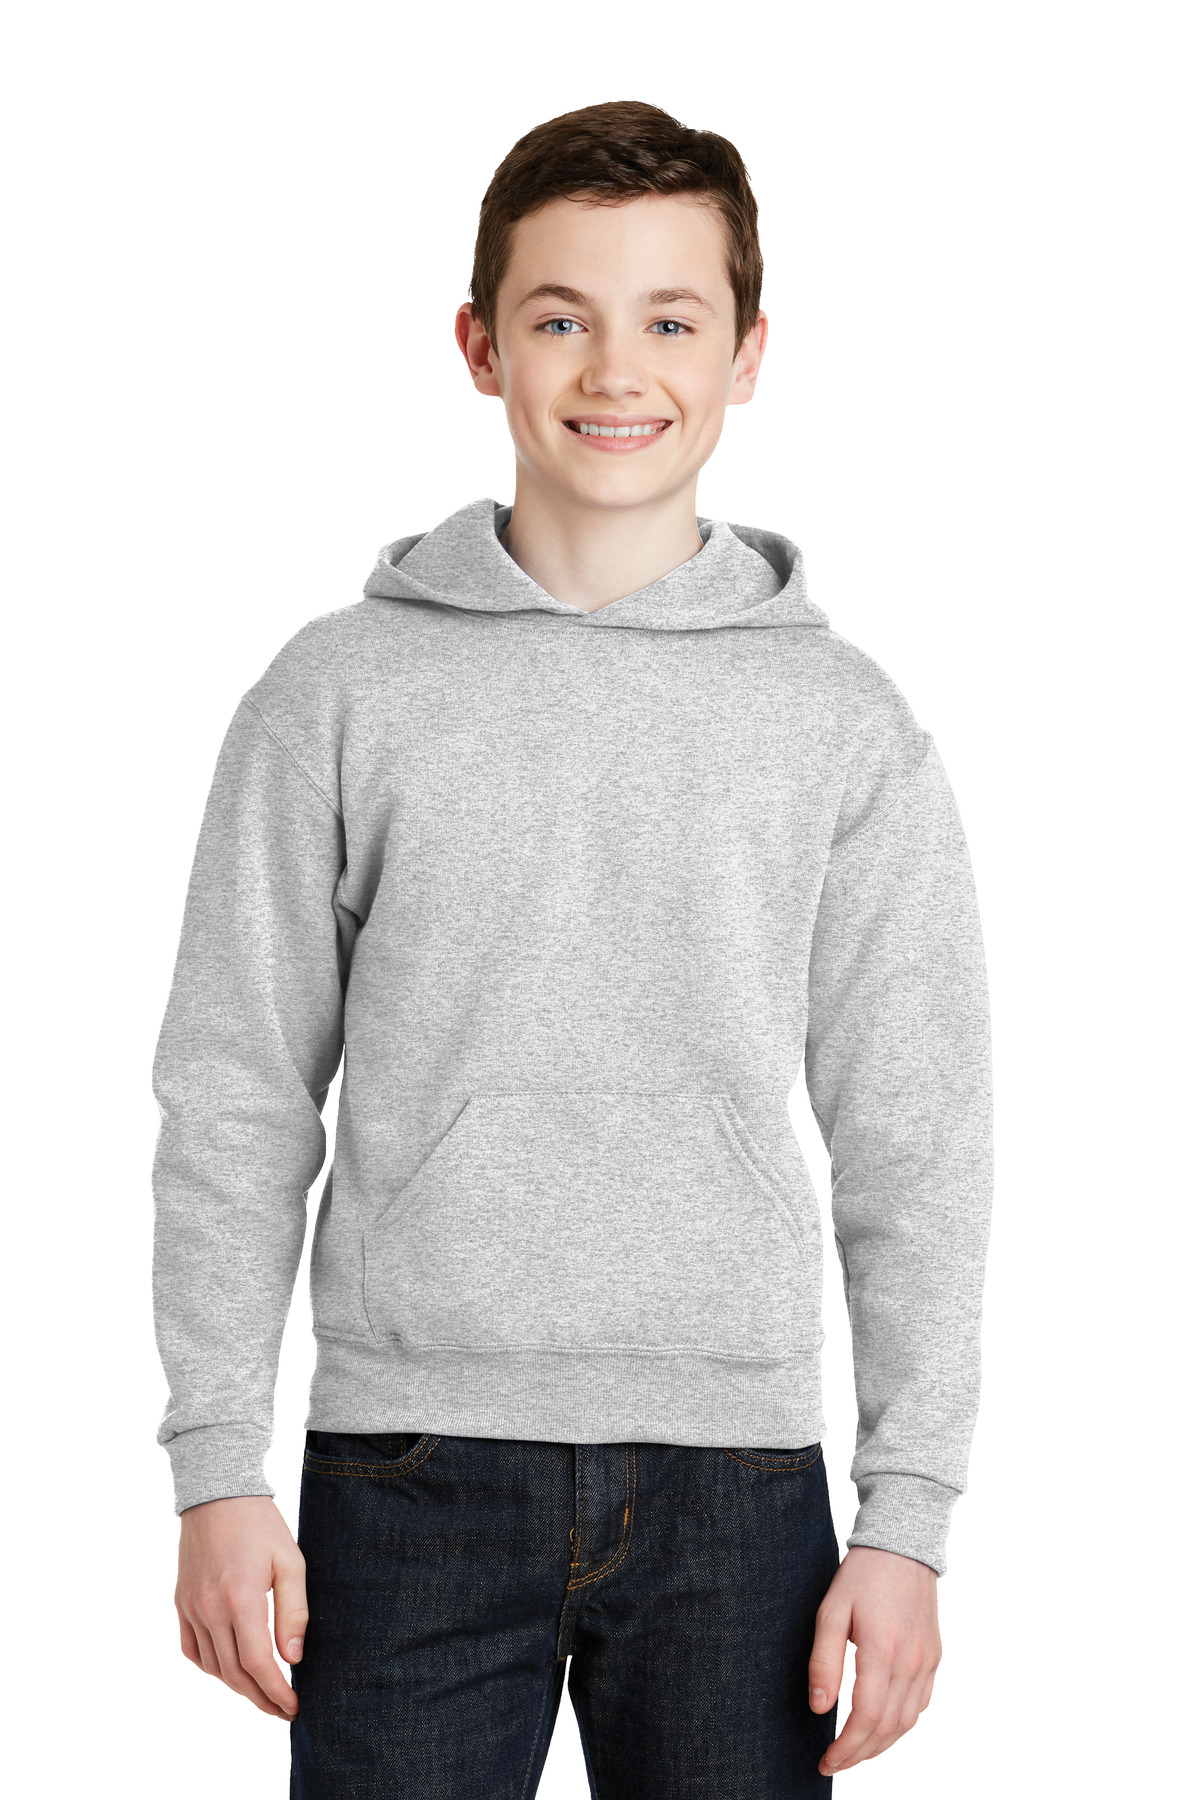 JERZEES - Youth NuBlend Pullover Hooded Sweatshirt....